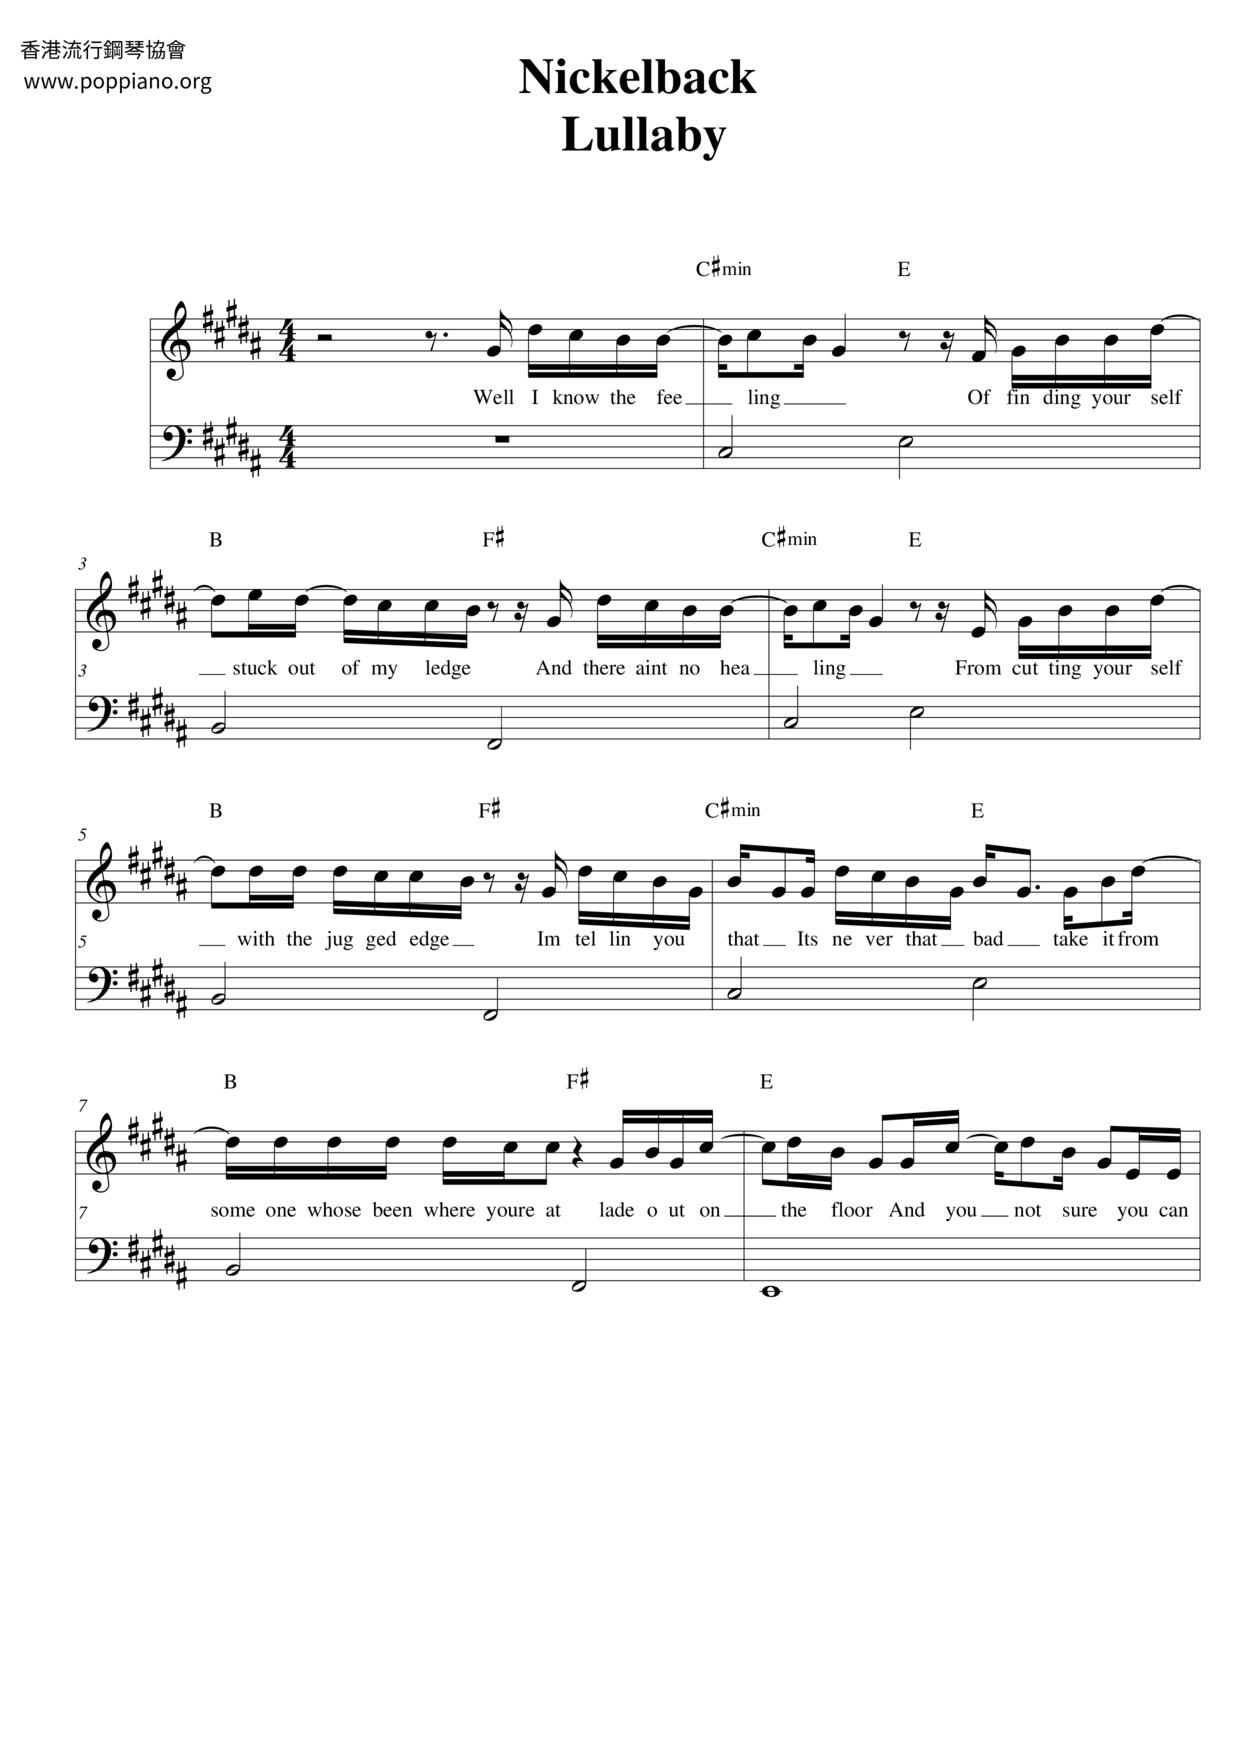 Lullaby(nickelback) Score